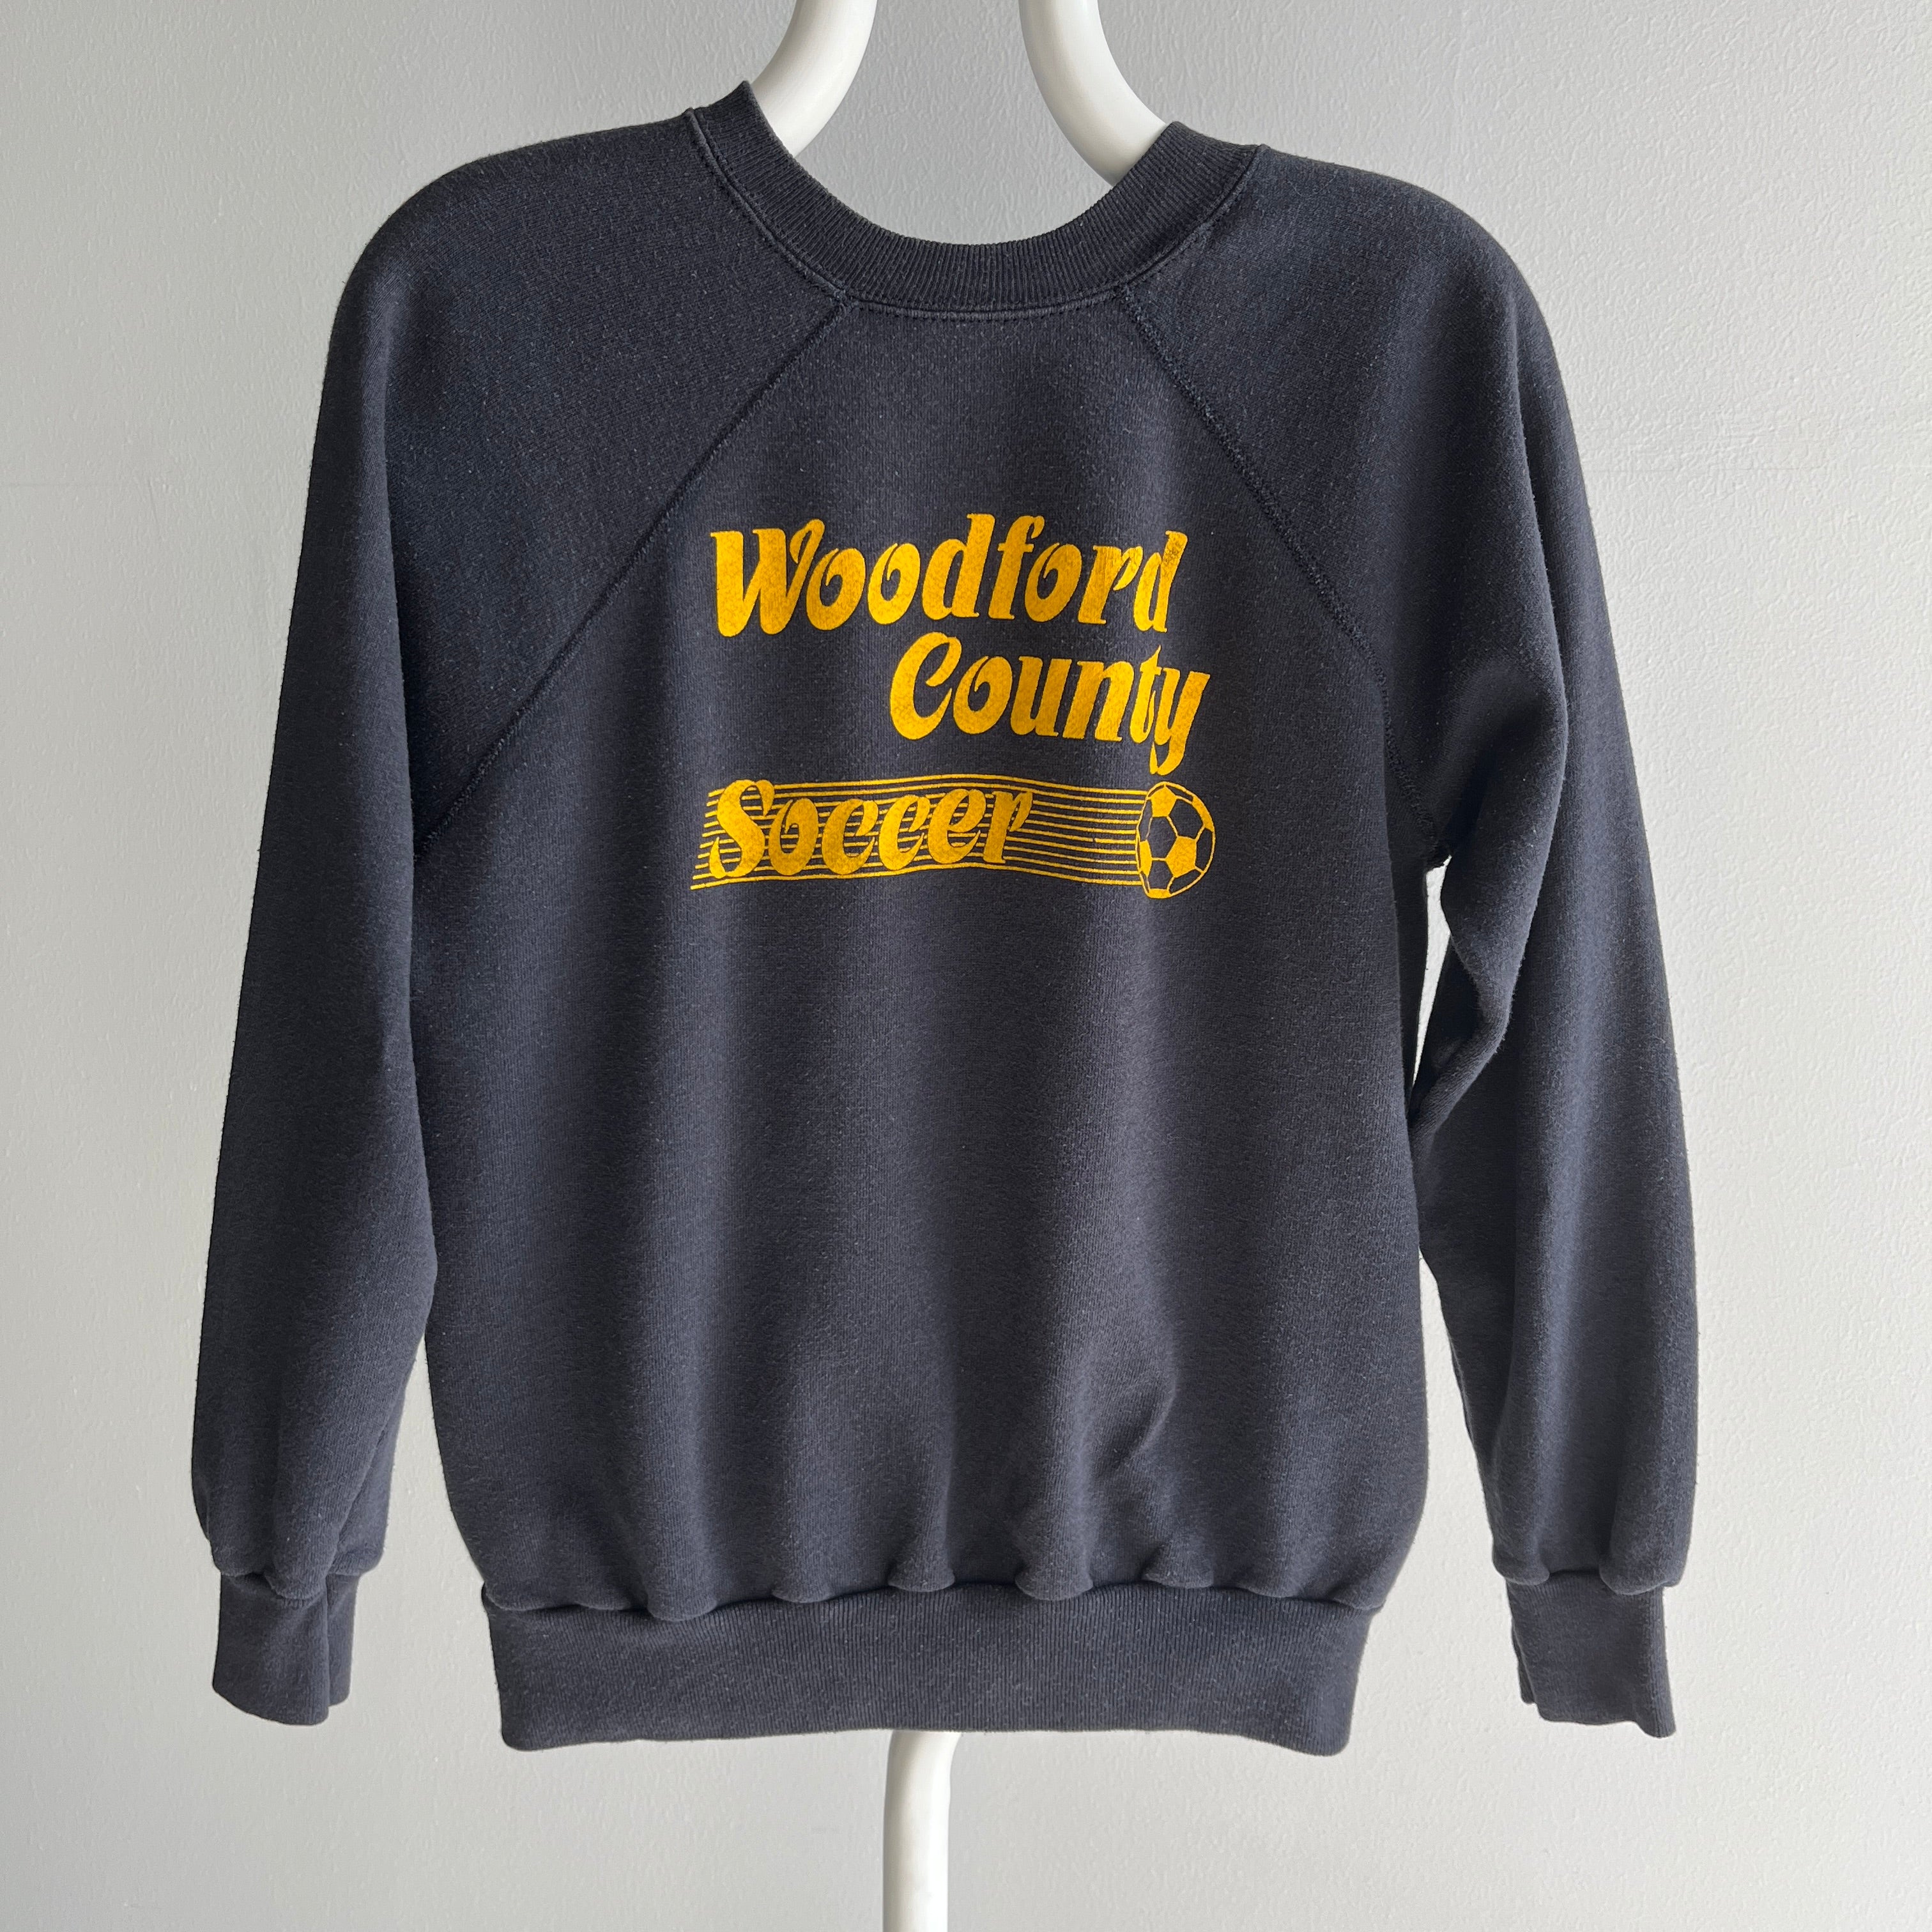 1980s Woodford County Soccer Smaller Faded Black Sweatshirt